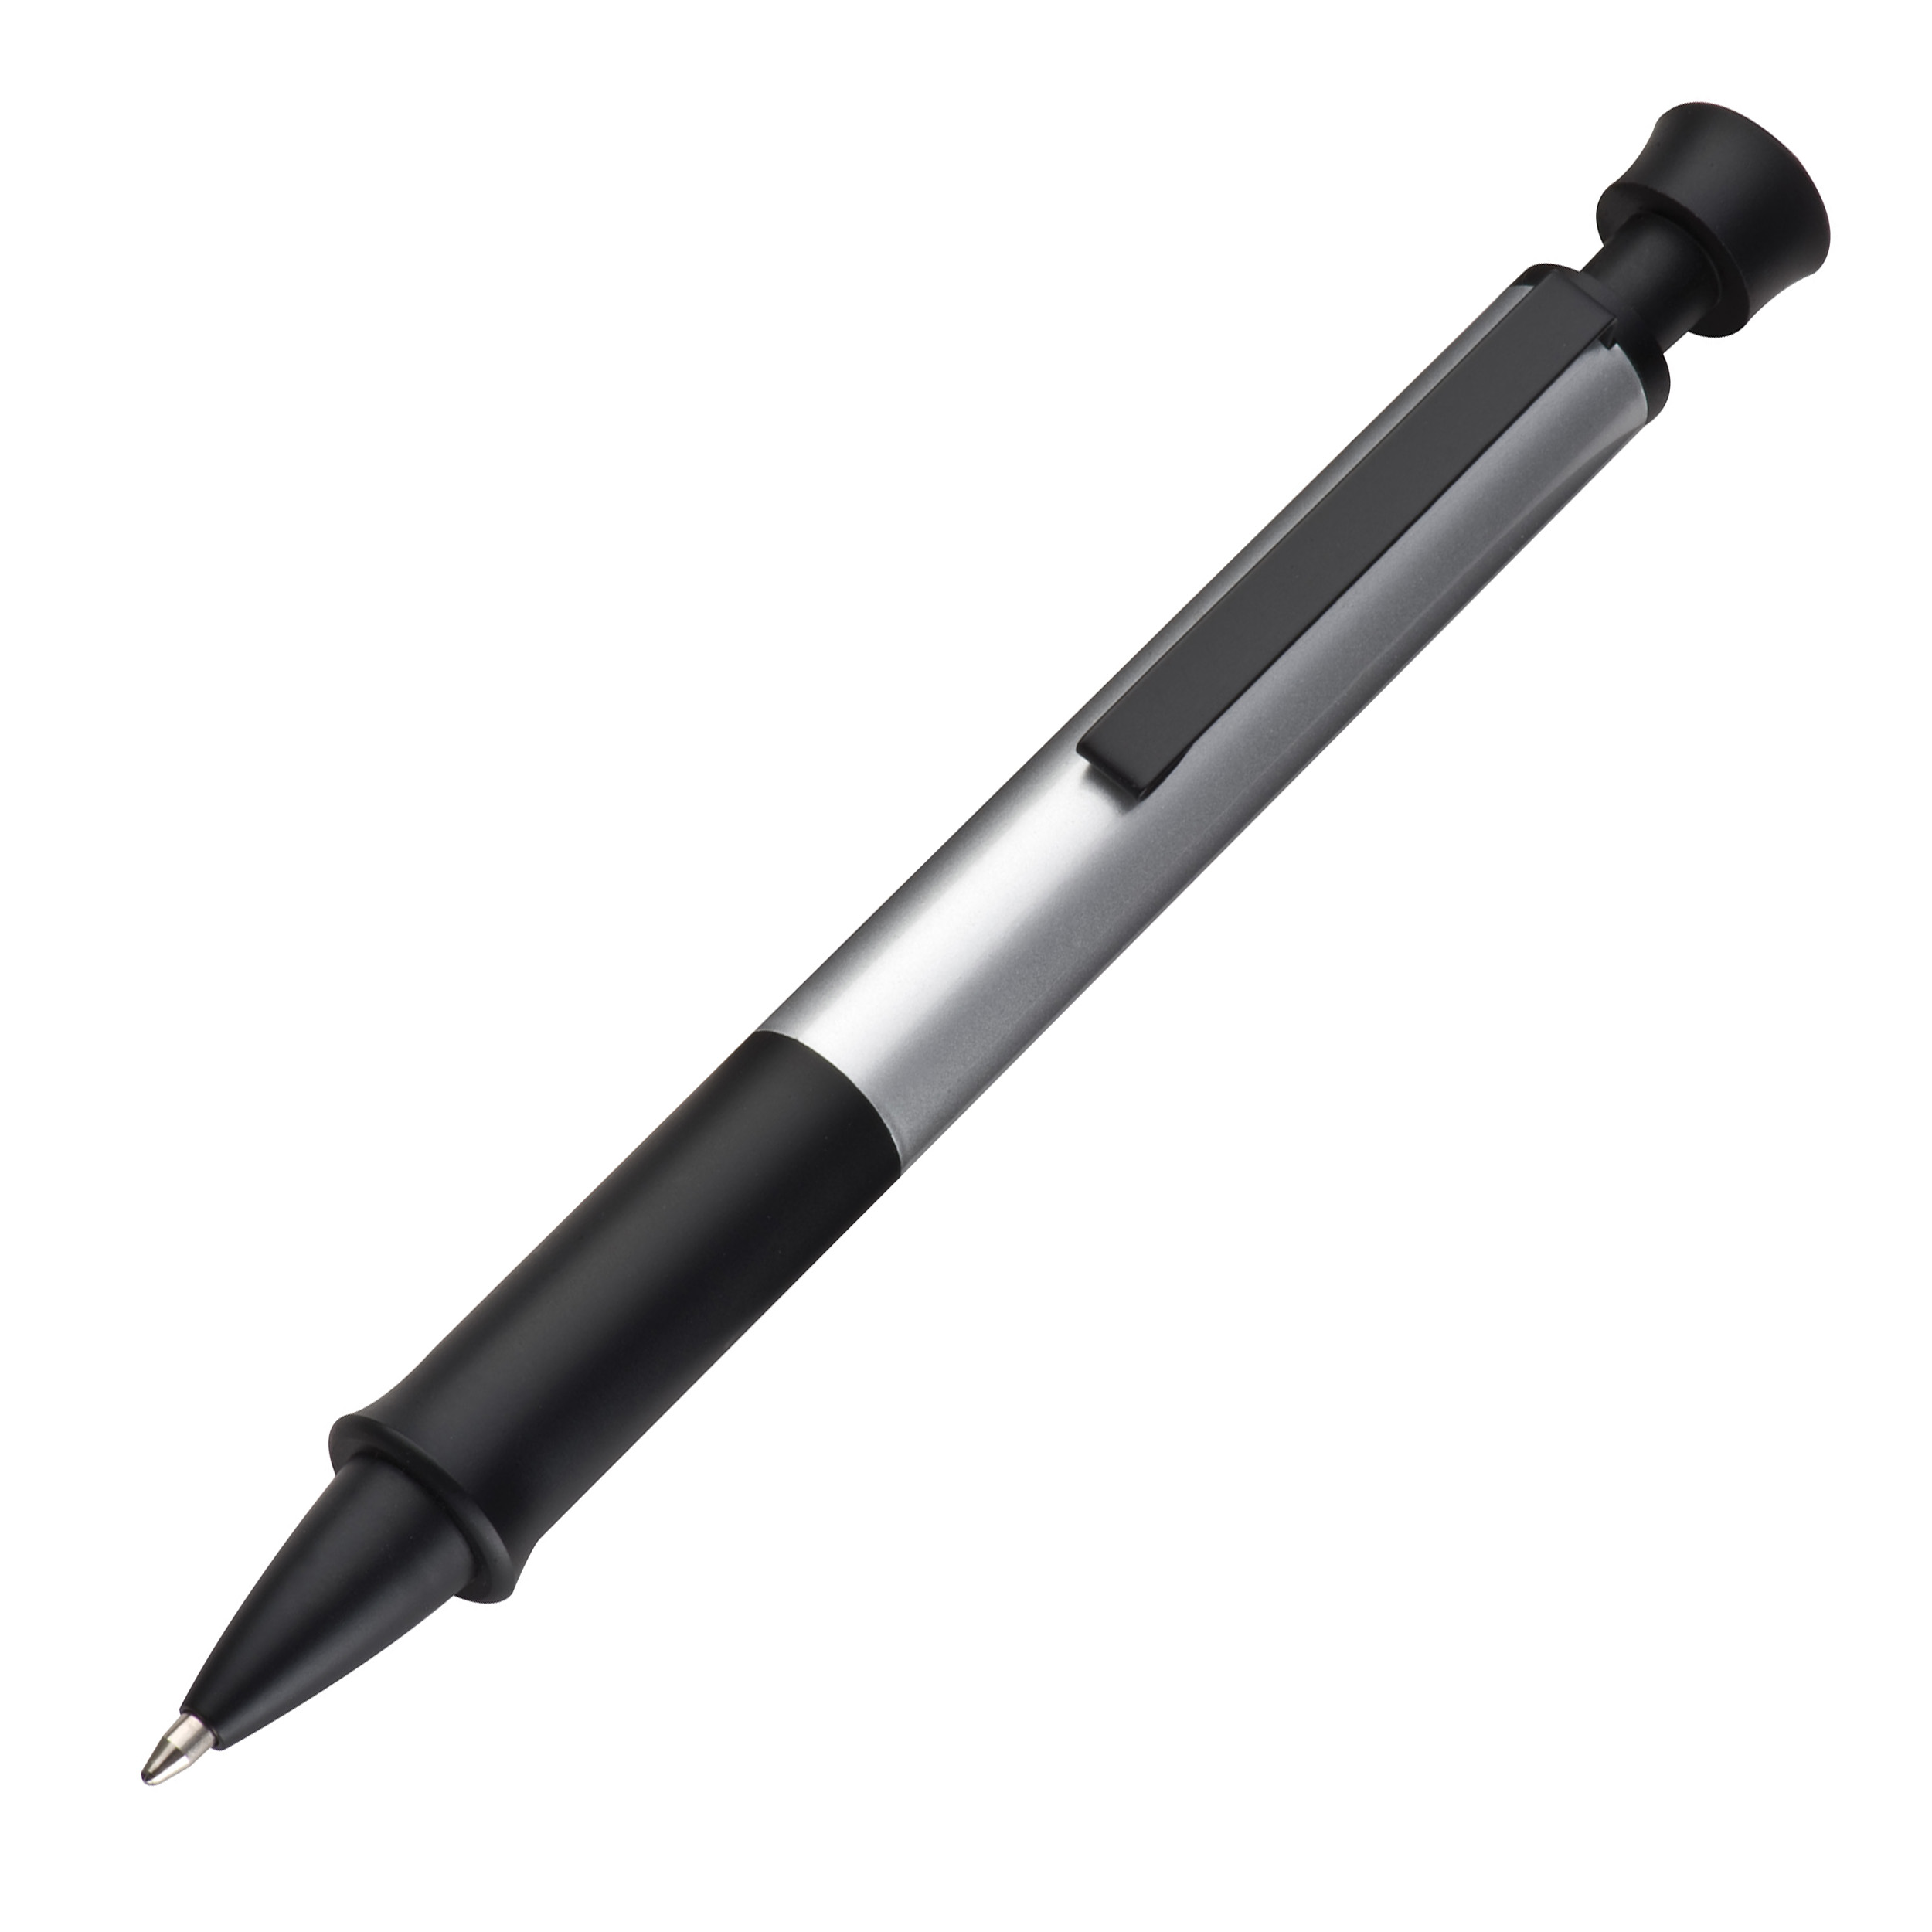 Aluminium ball pen with black applications